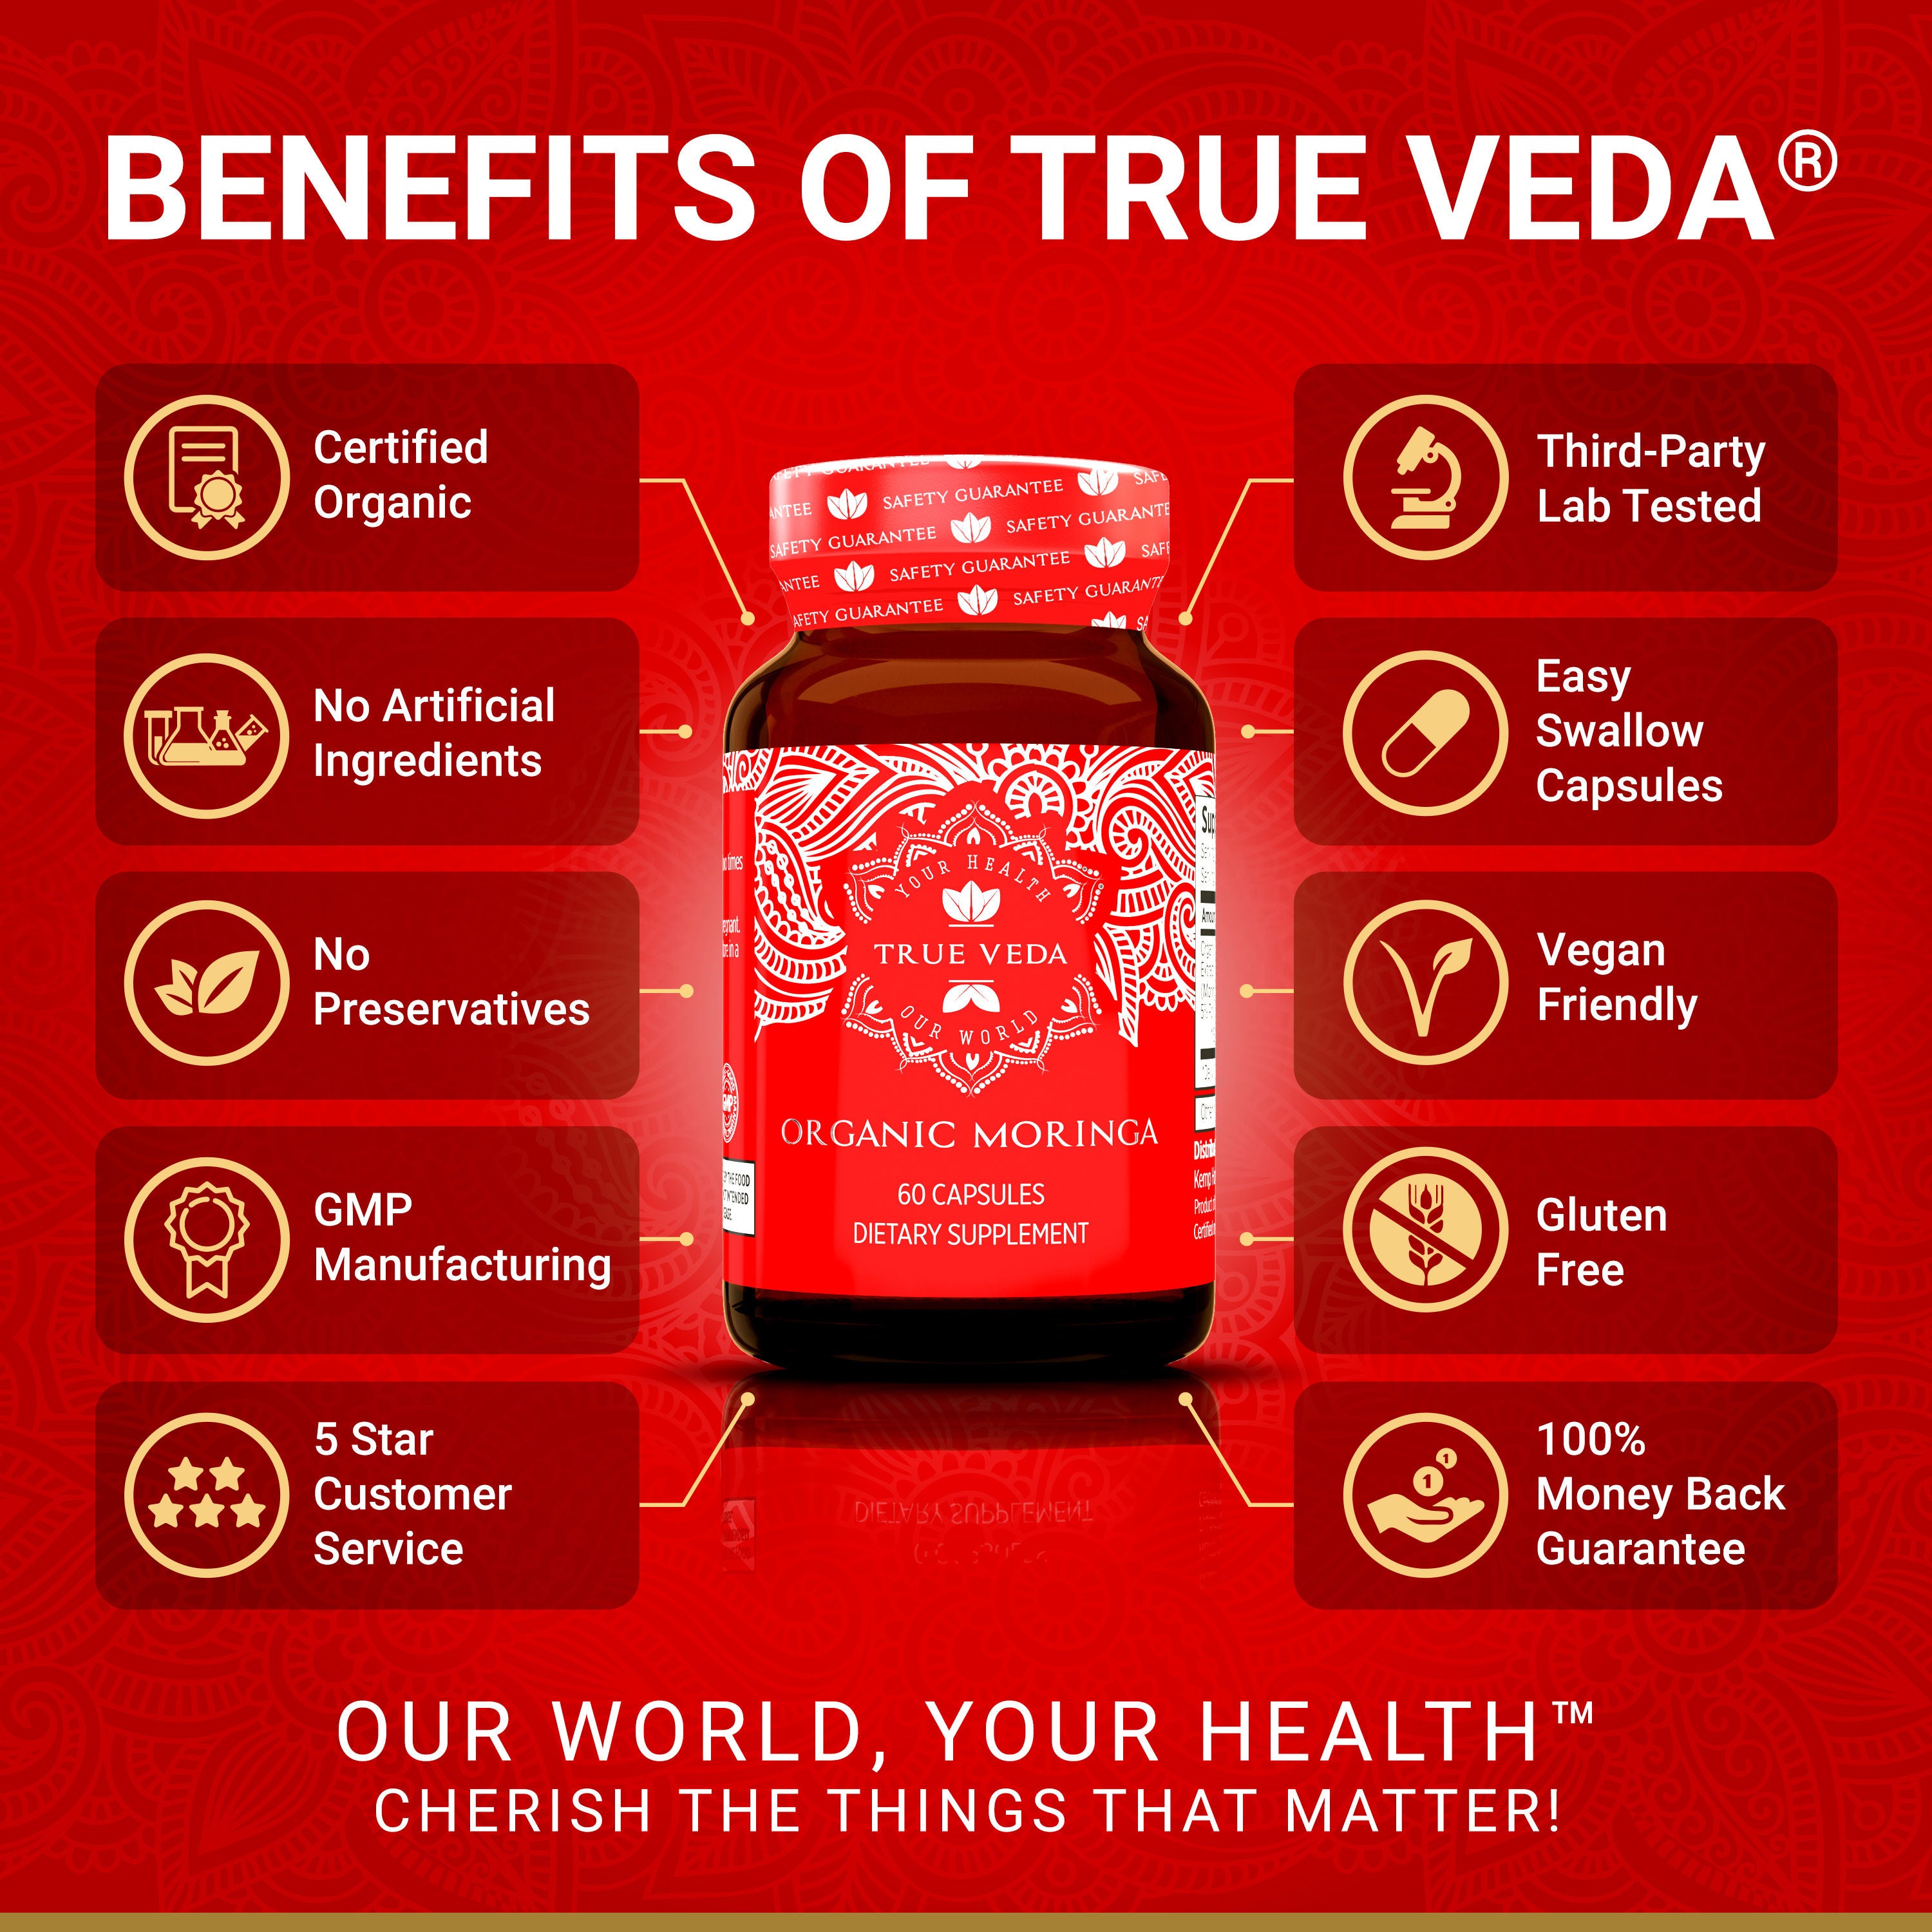 True Veda Organic Moringa 360 Capsules (6 Bottles)